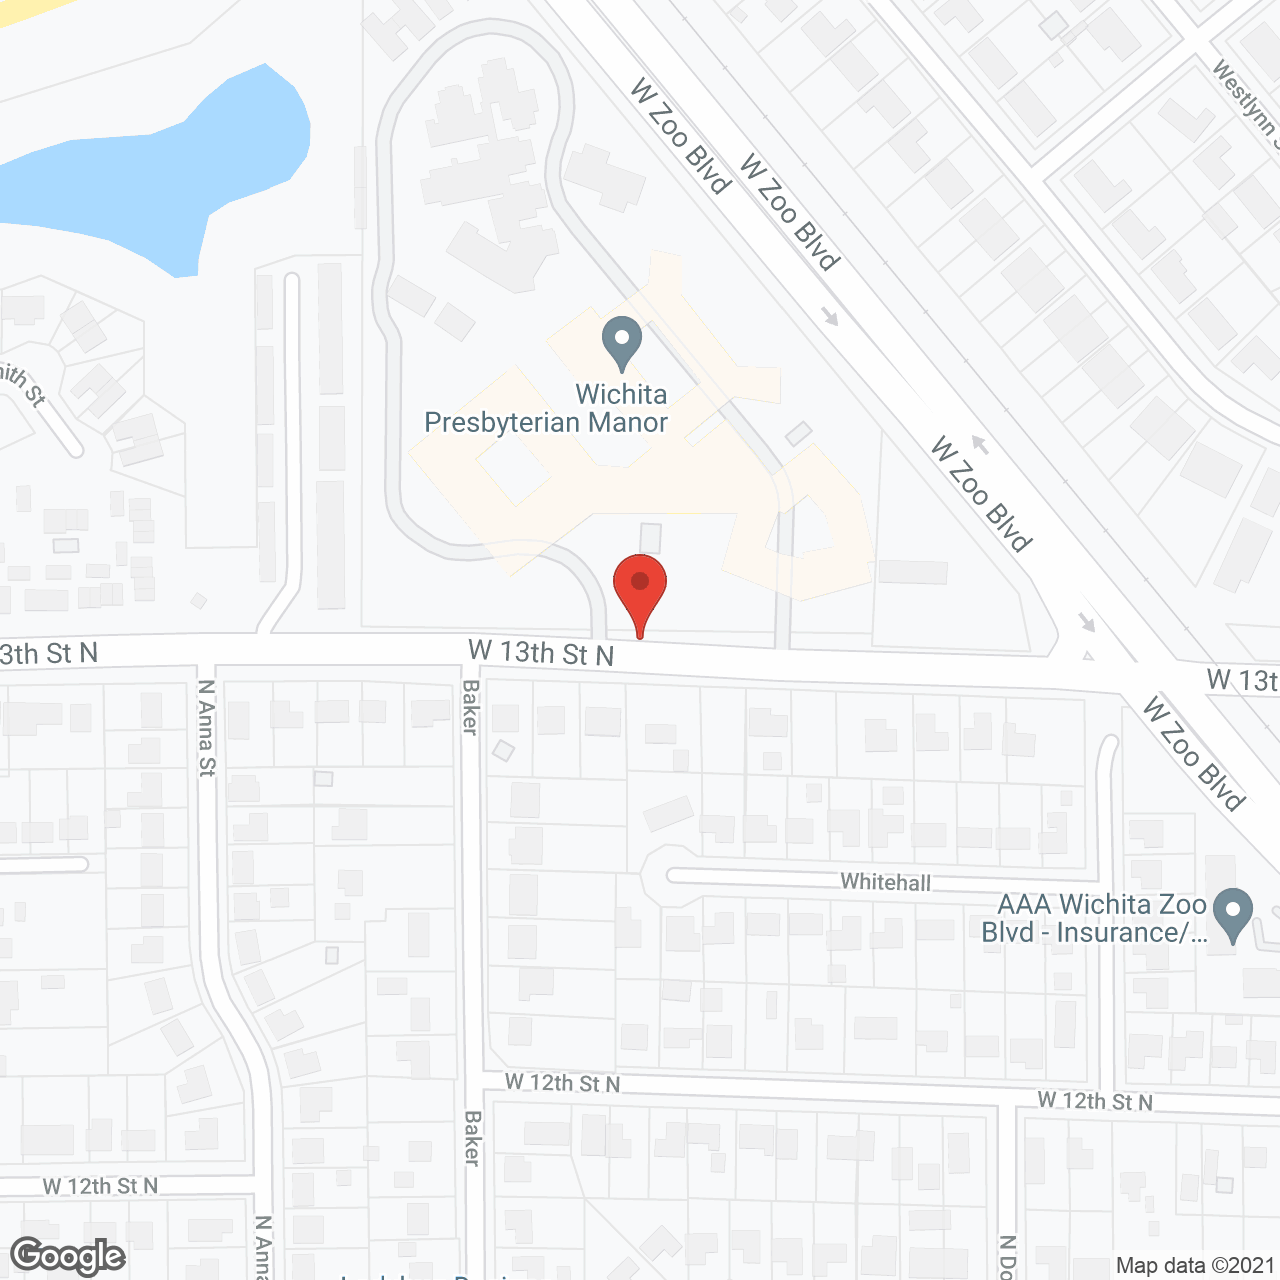 Wichita Presbyterian Manor in google map